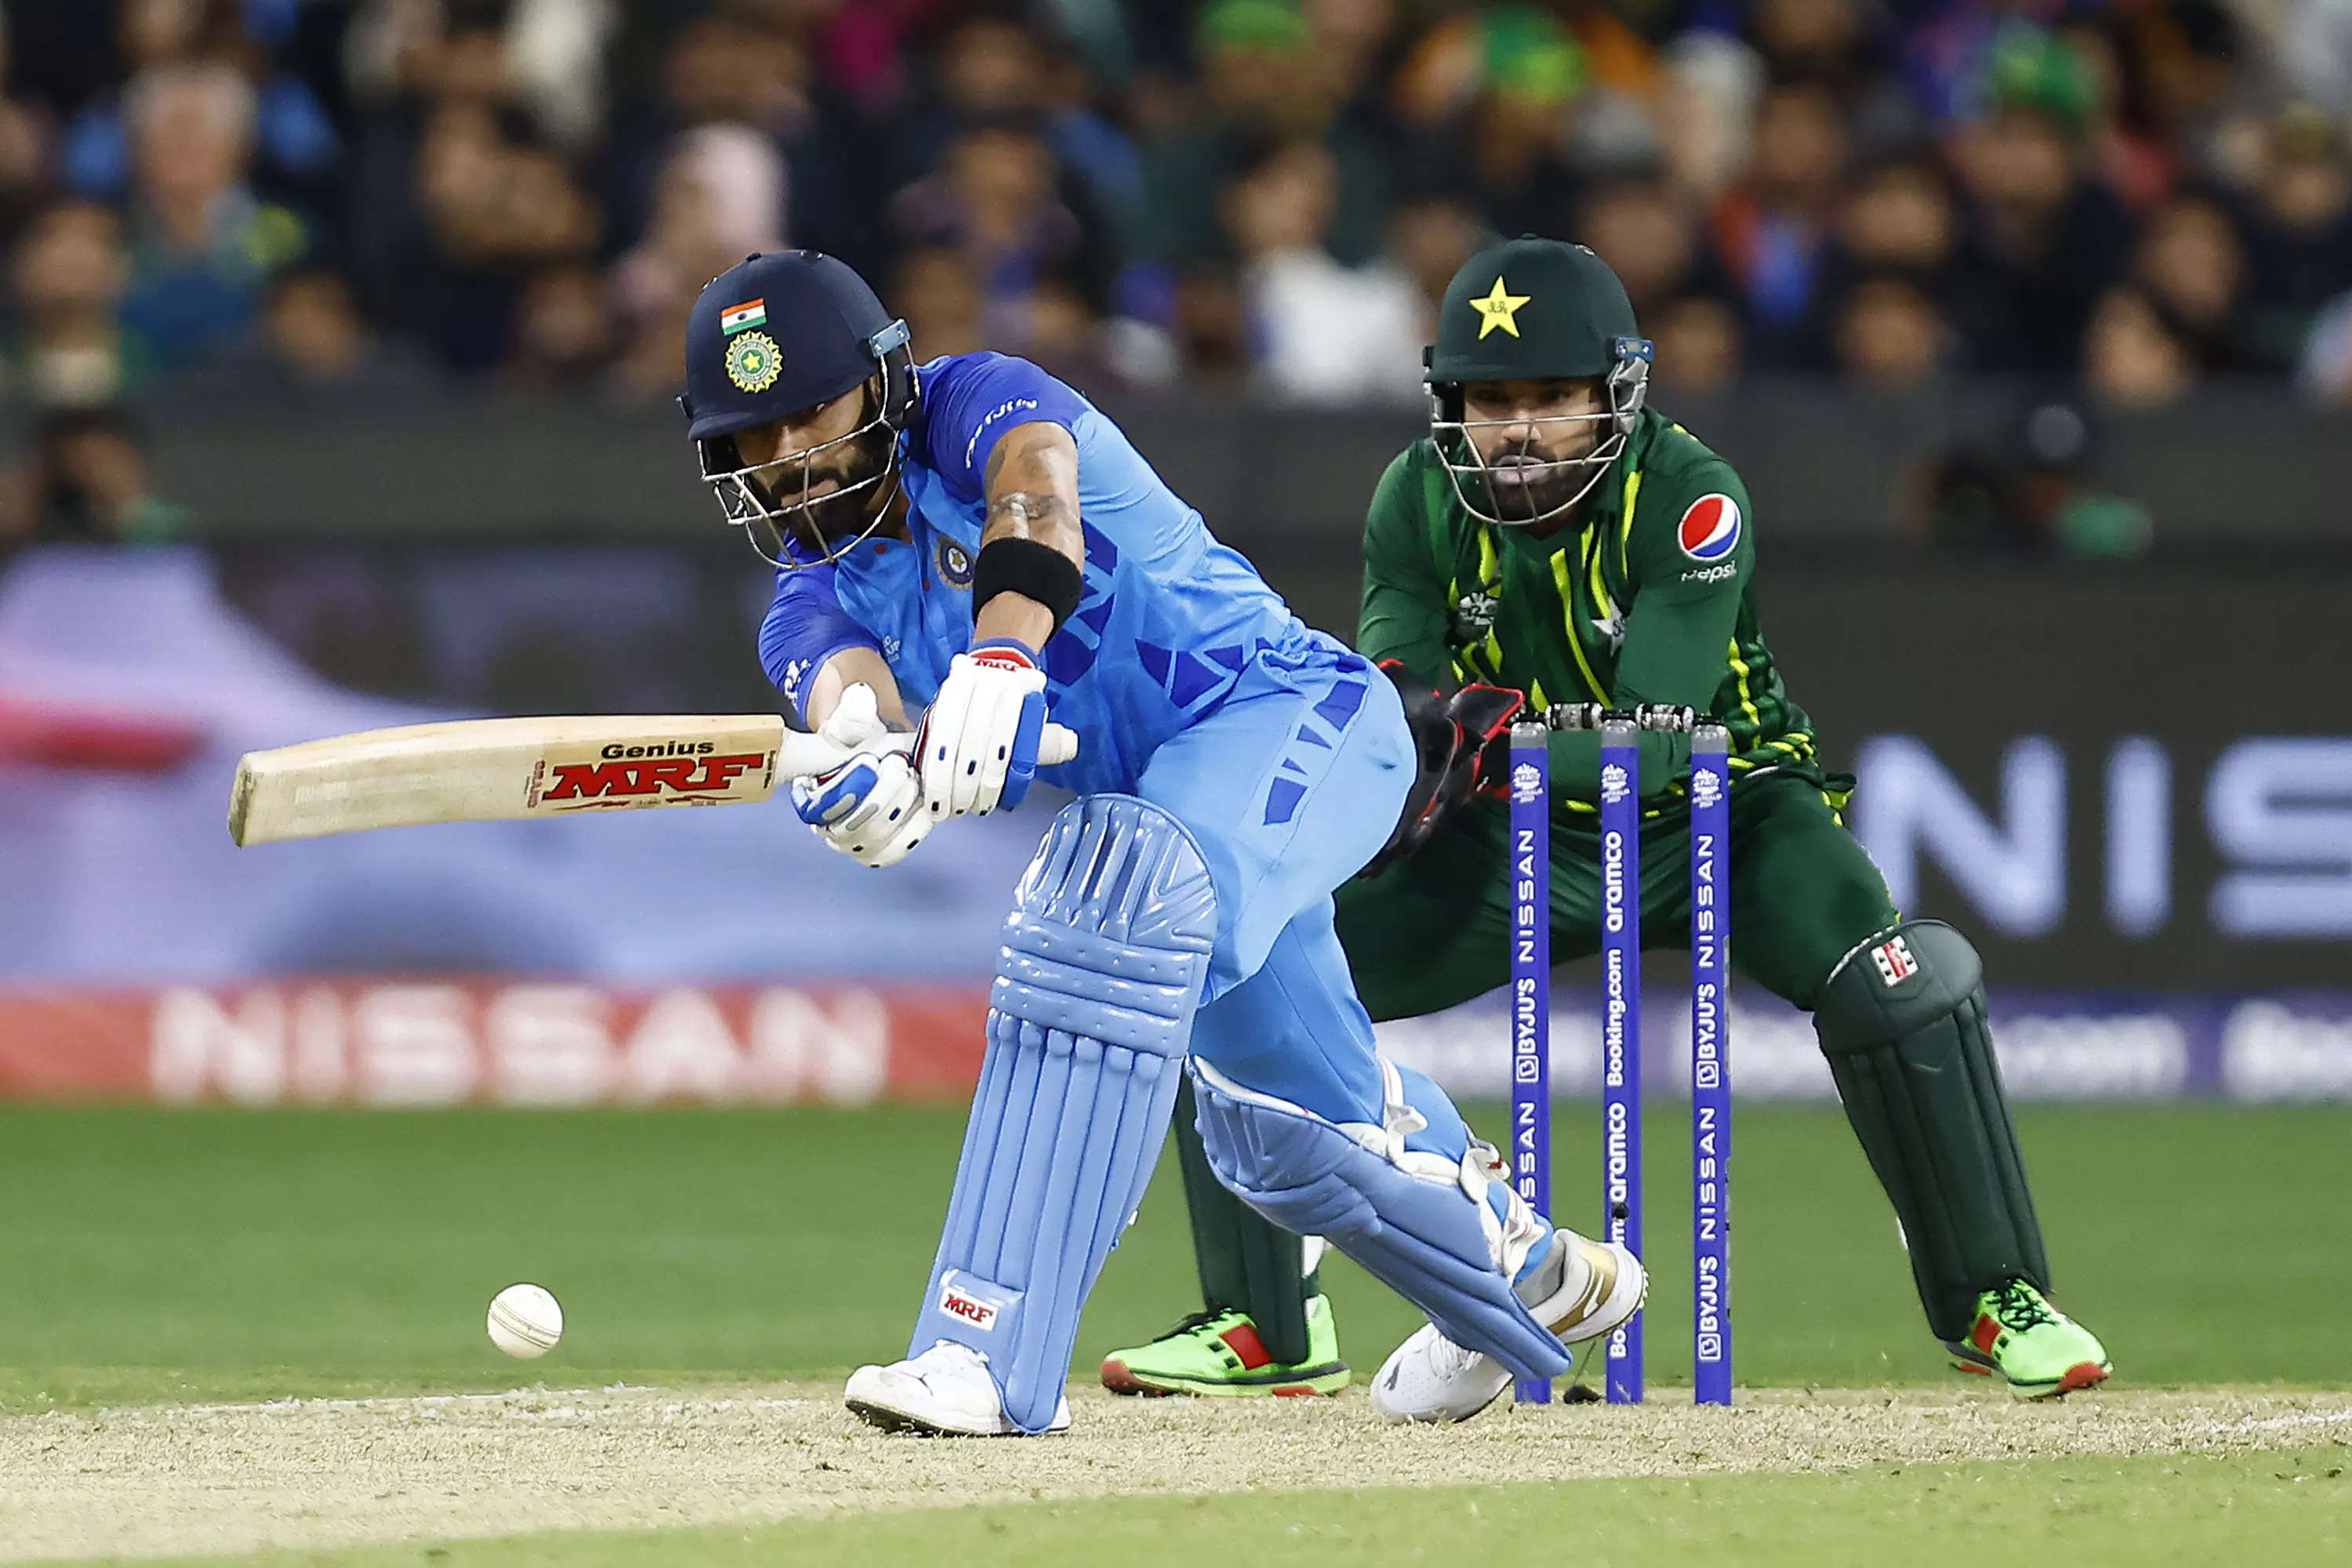 A​n unbeaten 82 from Virat Kohli led India to a last-ball win over Pakistan